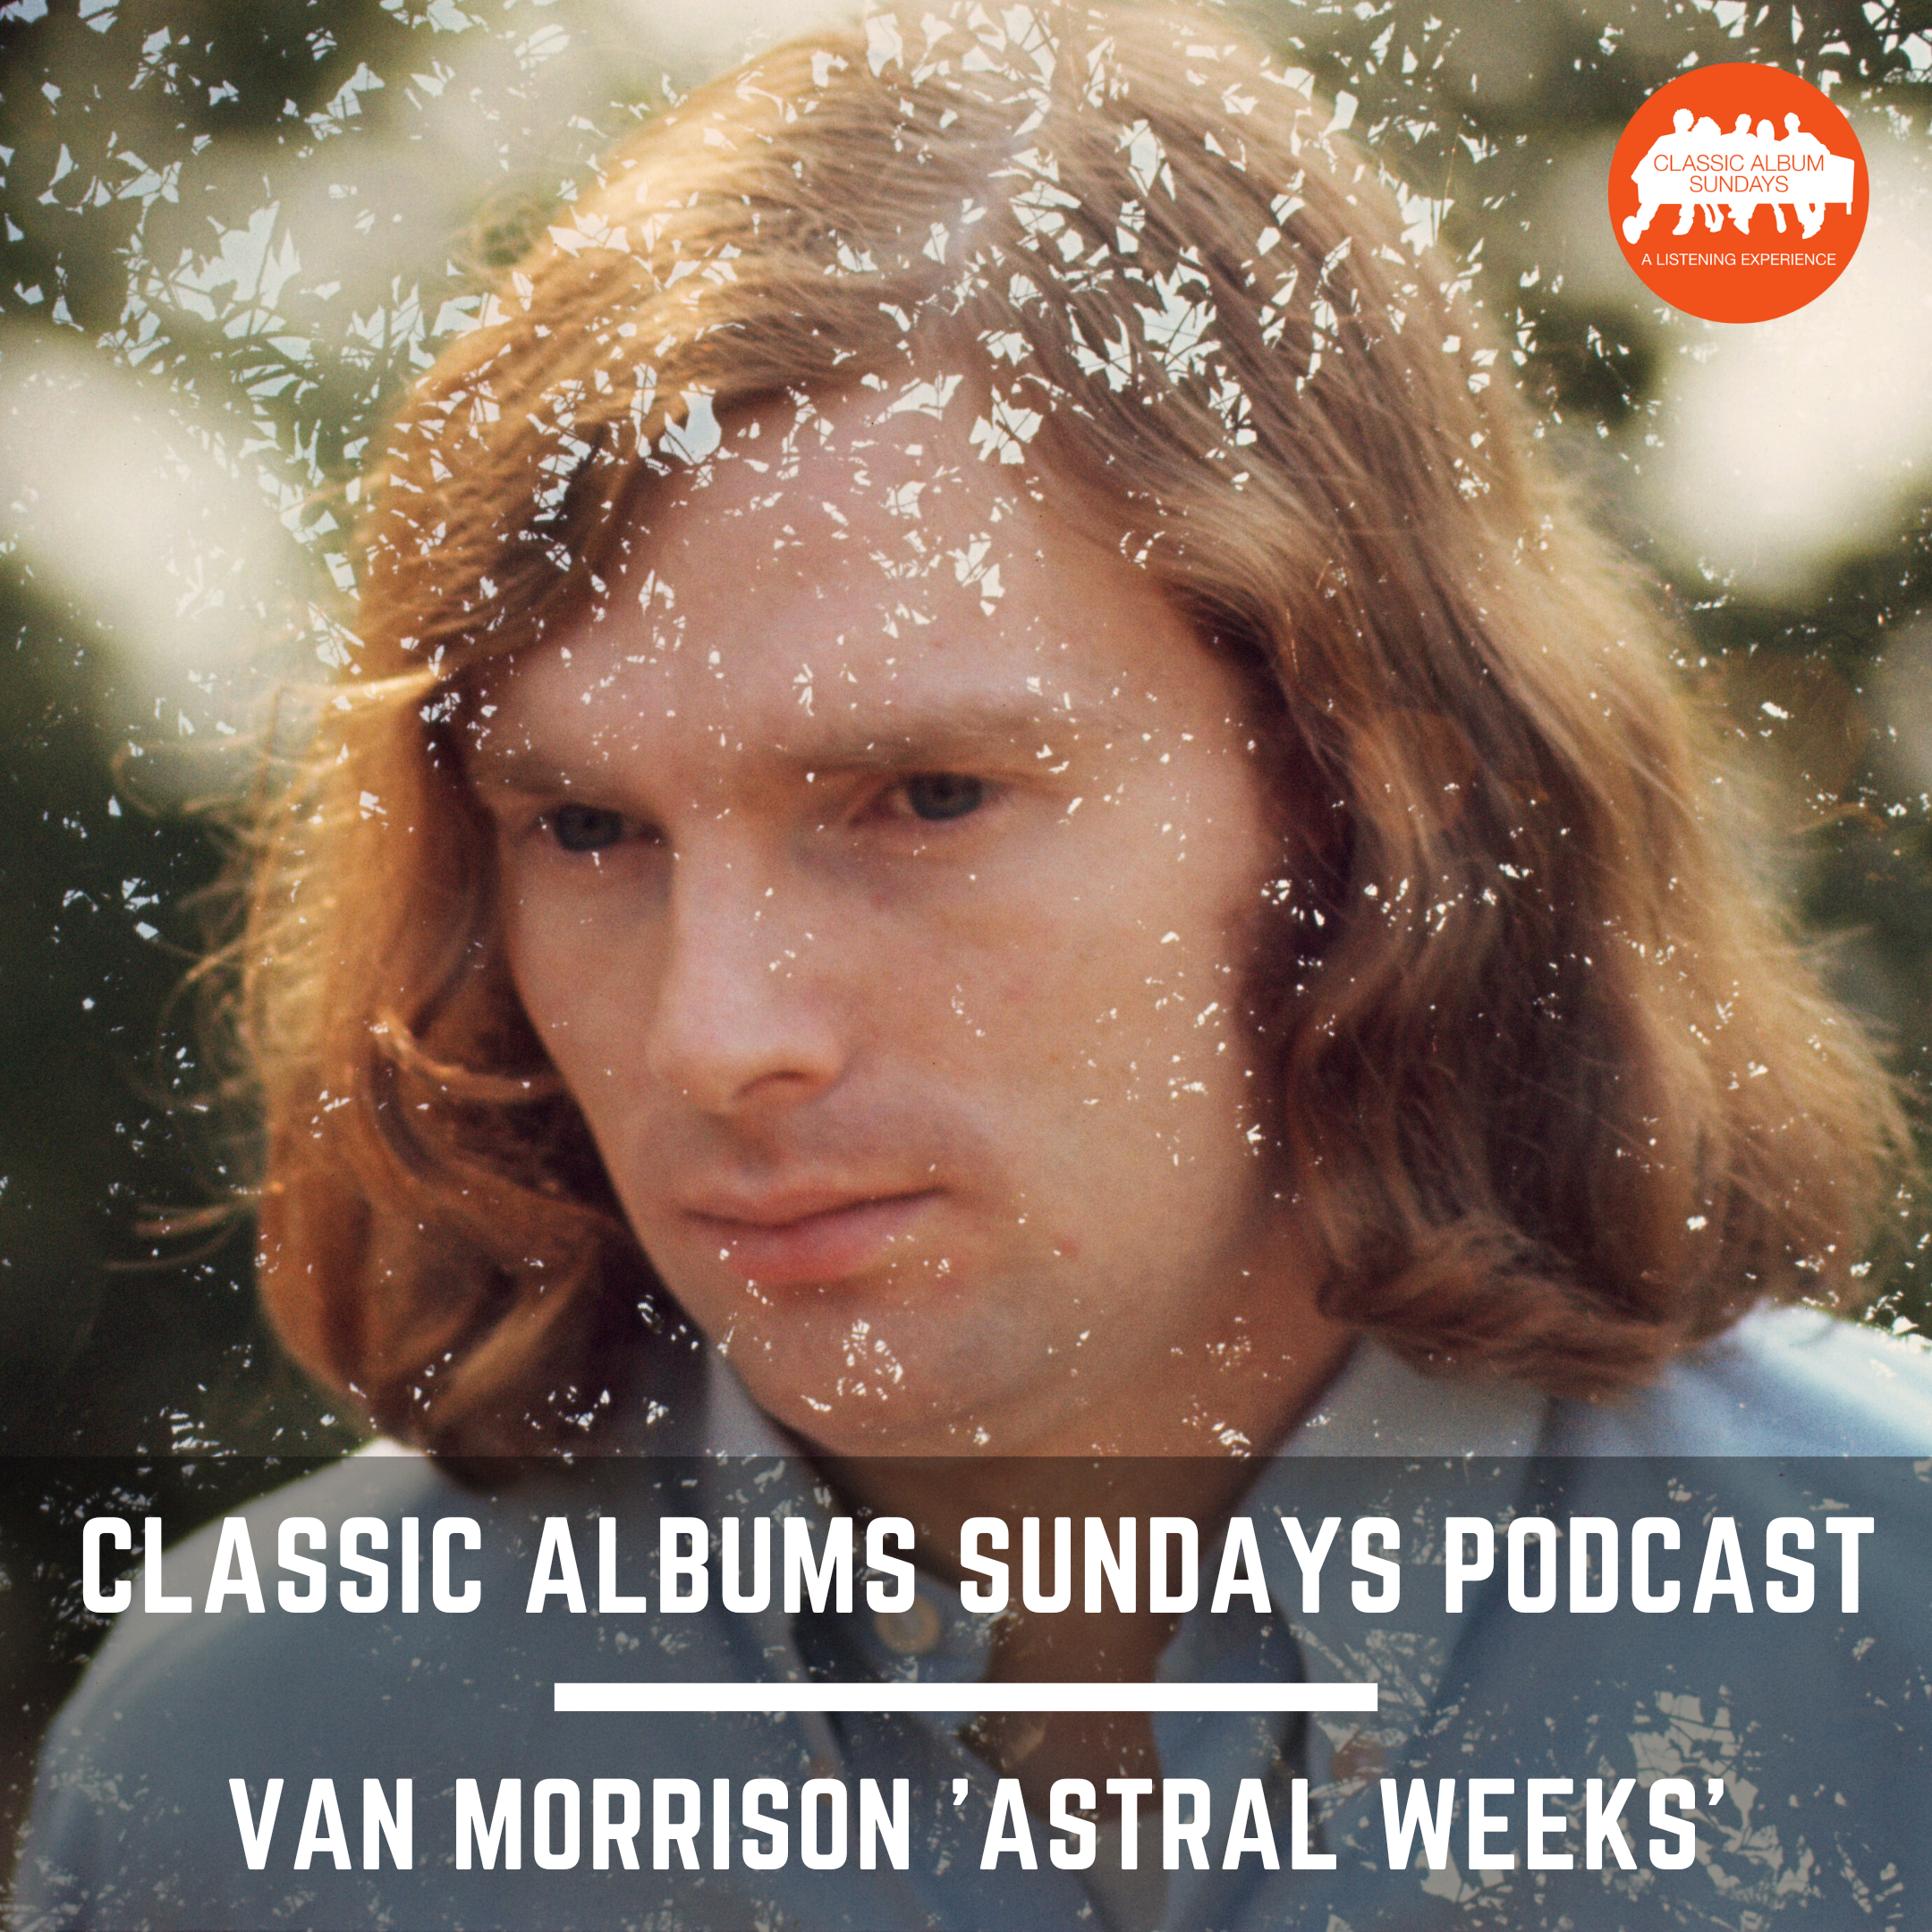 Classic Album Sundays Podcast - Van Morrison ’Astral Weeks’